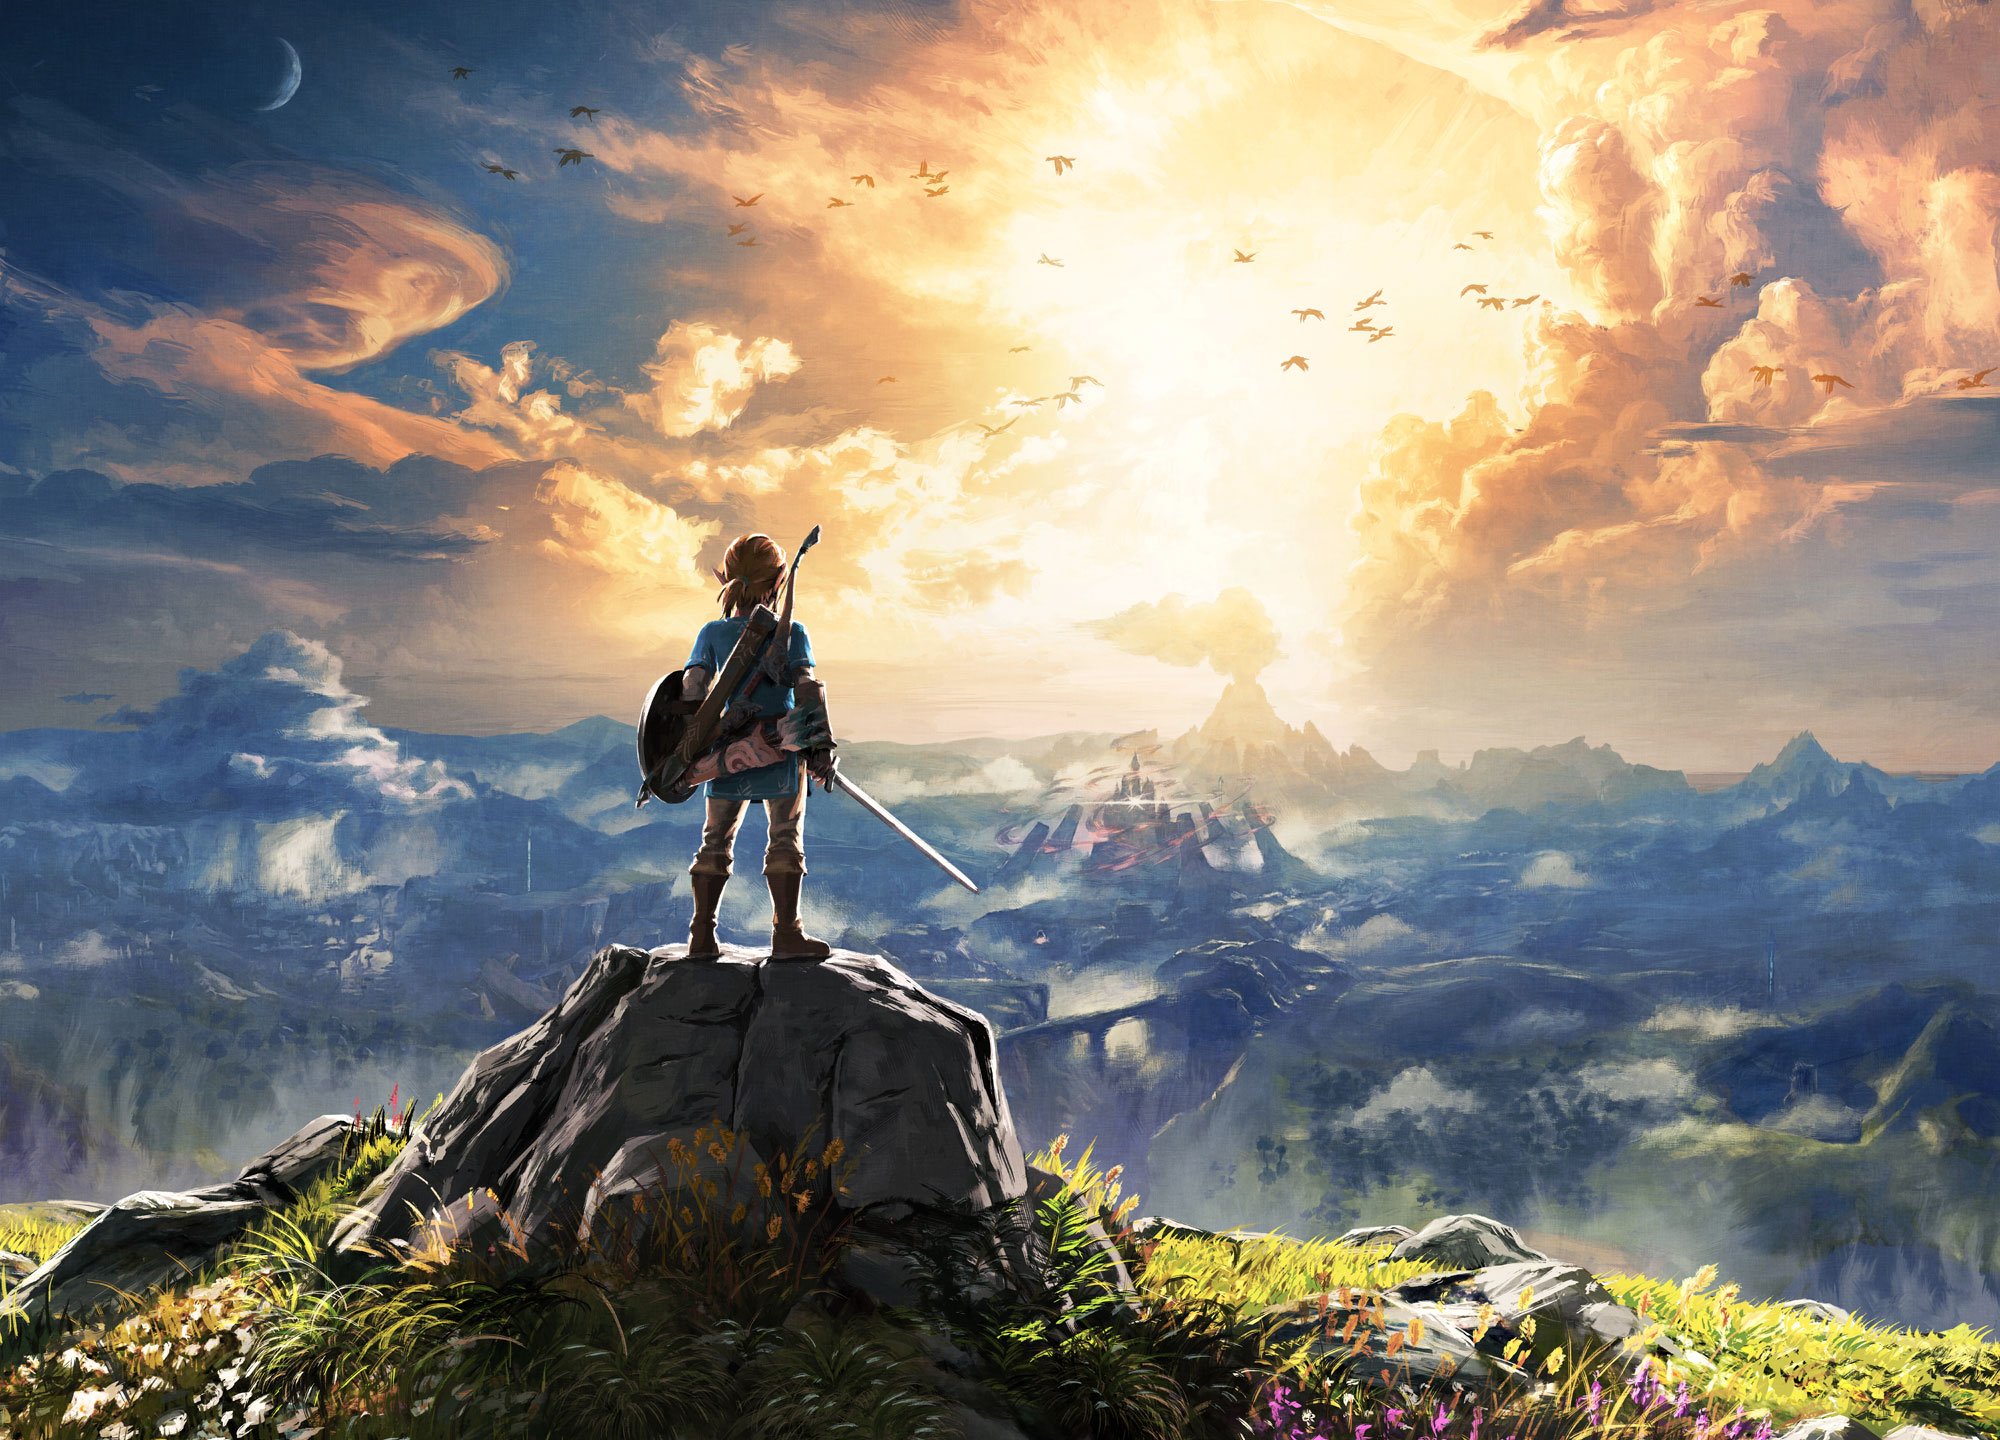 Zelda: Breath of the Wild Wii U confirmed for March 3